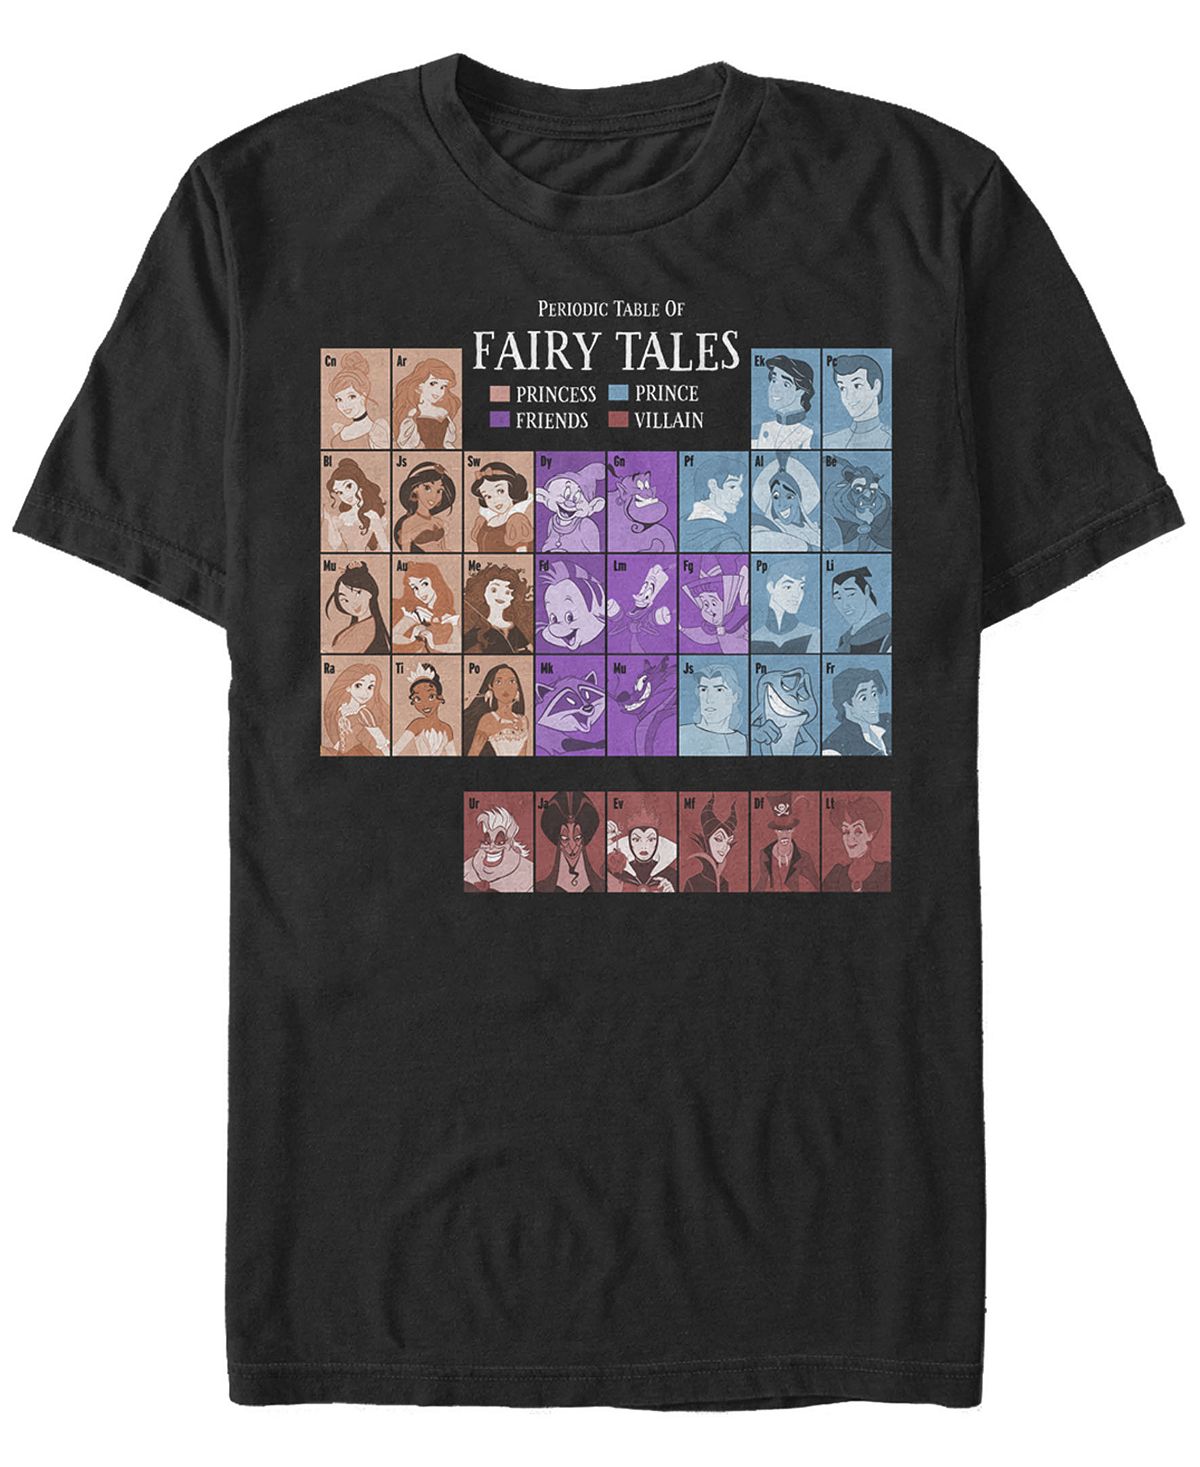 Мужская футболка с короткими рукавами princess periodic table of fairy tales Fifth Sun, черный цена и фото